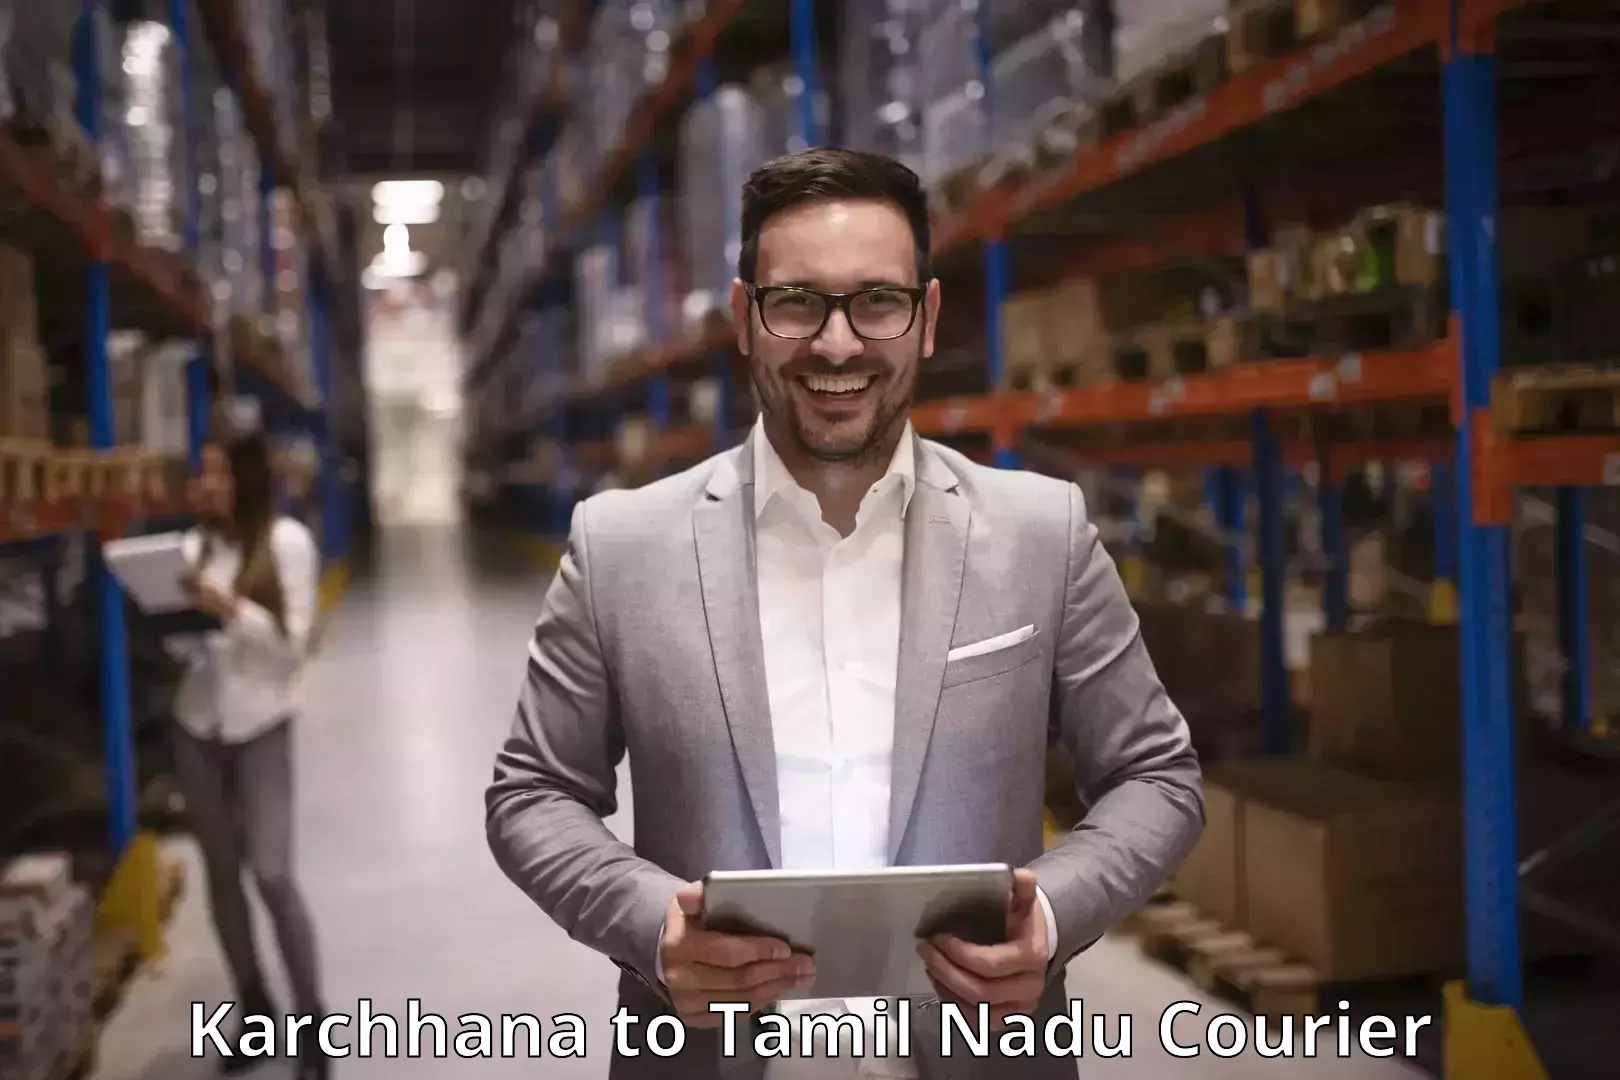 Efficient order fulfillment Karchhana to Tamil Nadu